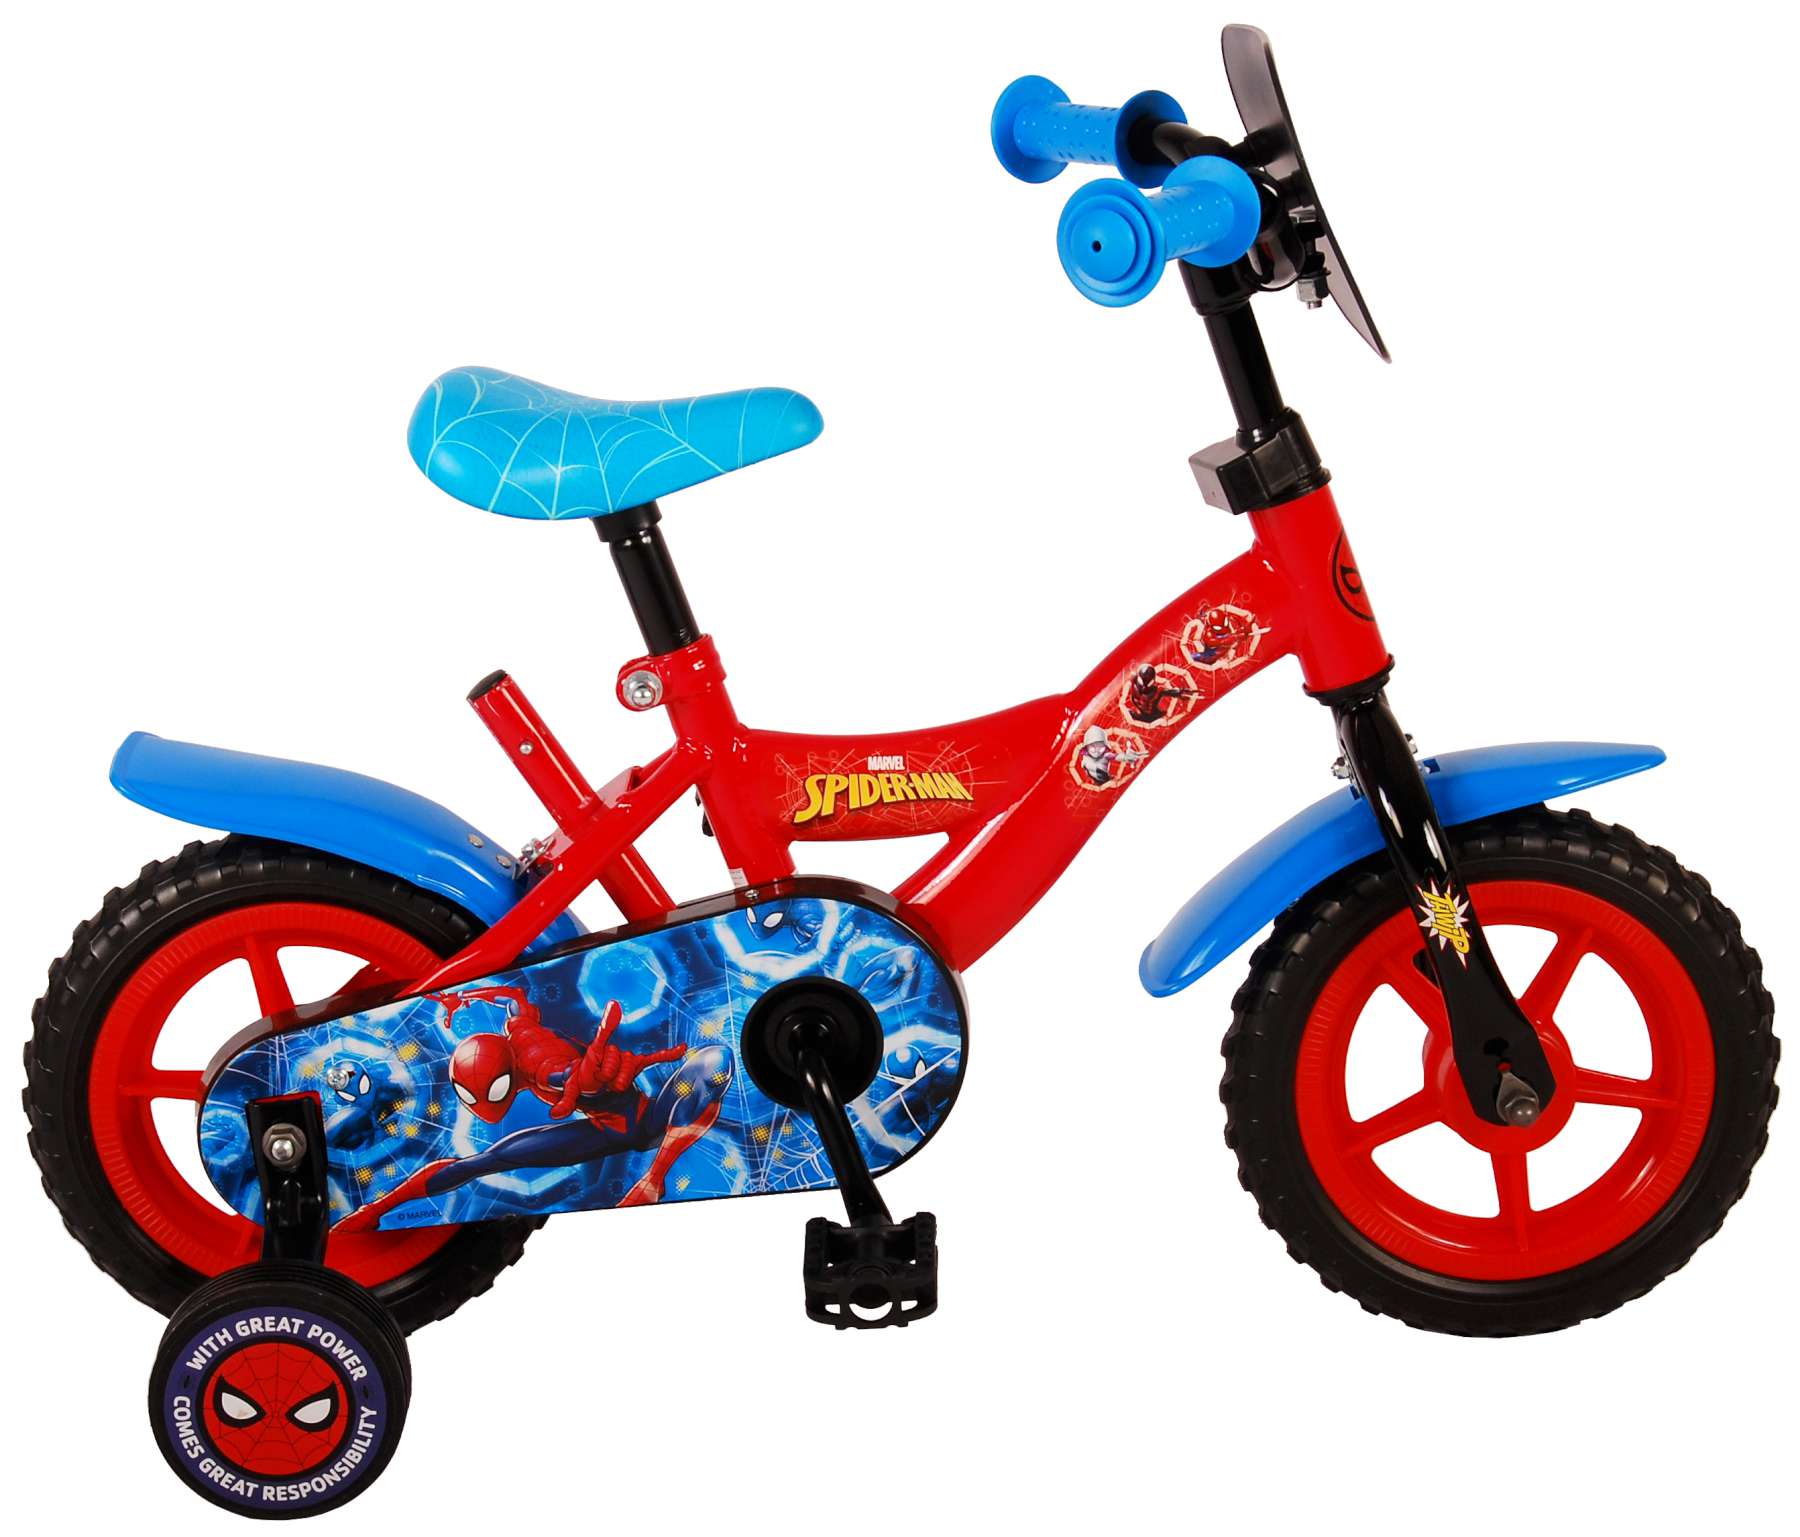 Vélo enfant Spiderman - garçon - 10 po - rouge/bleu